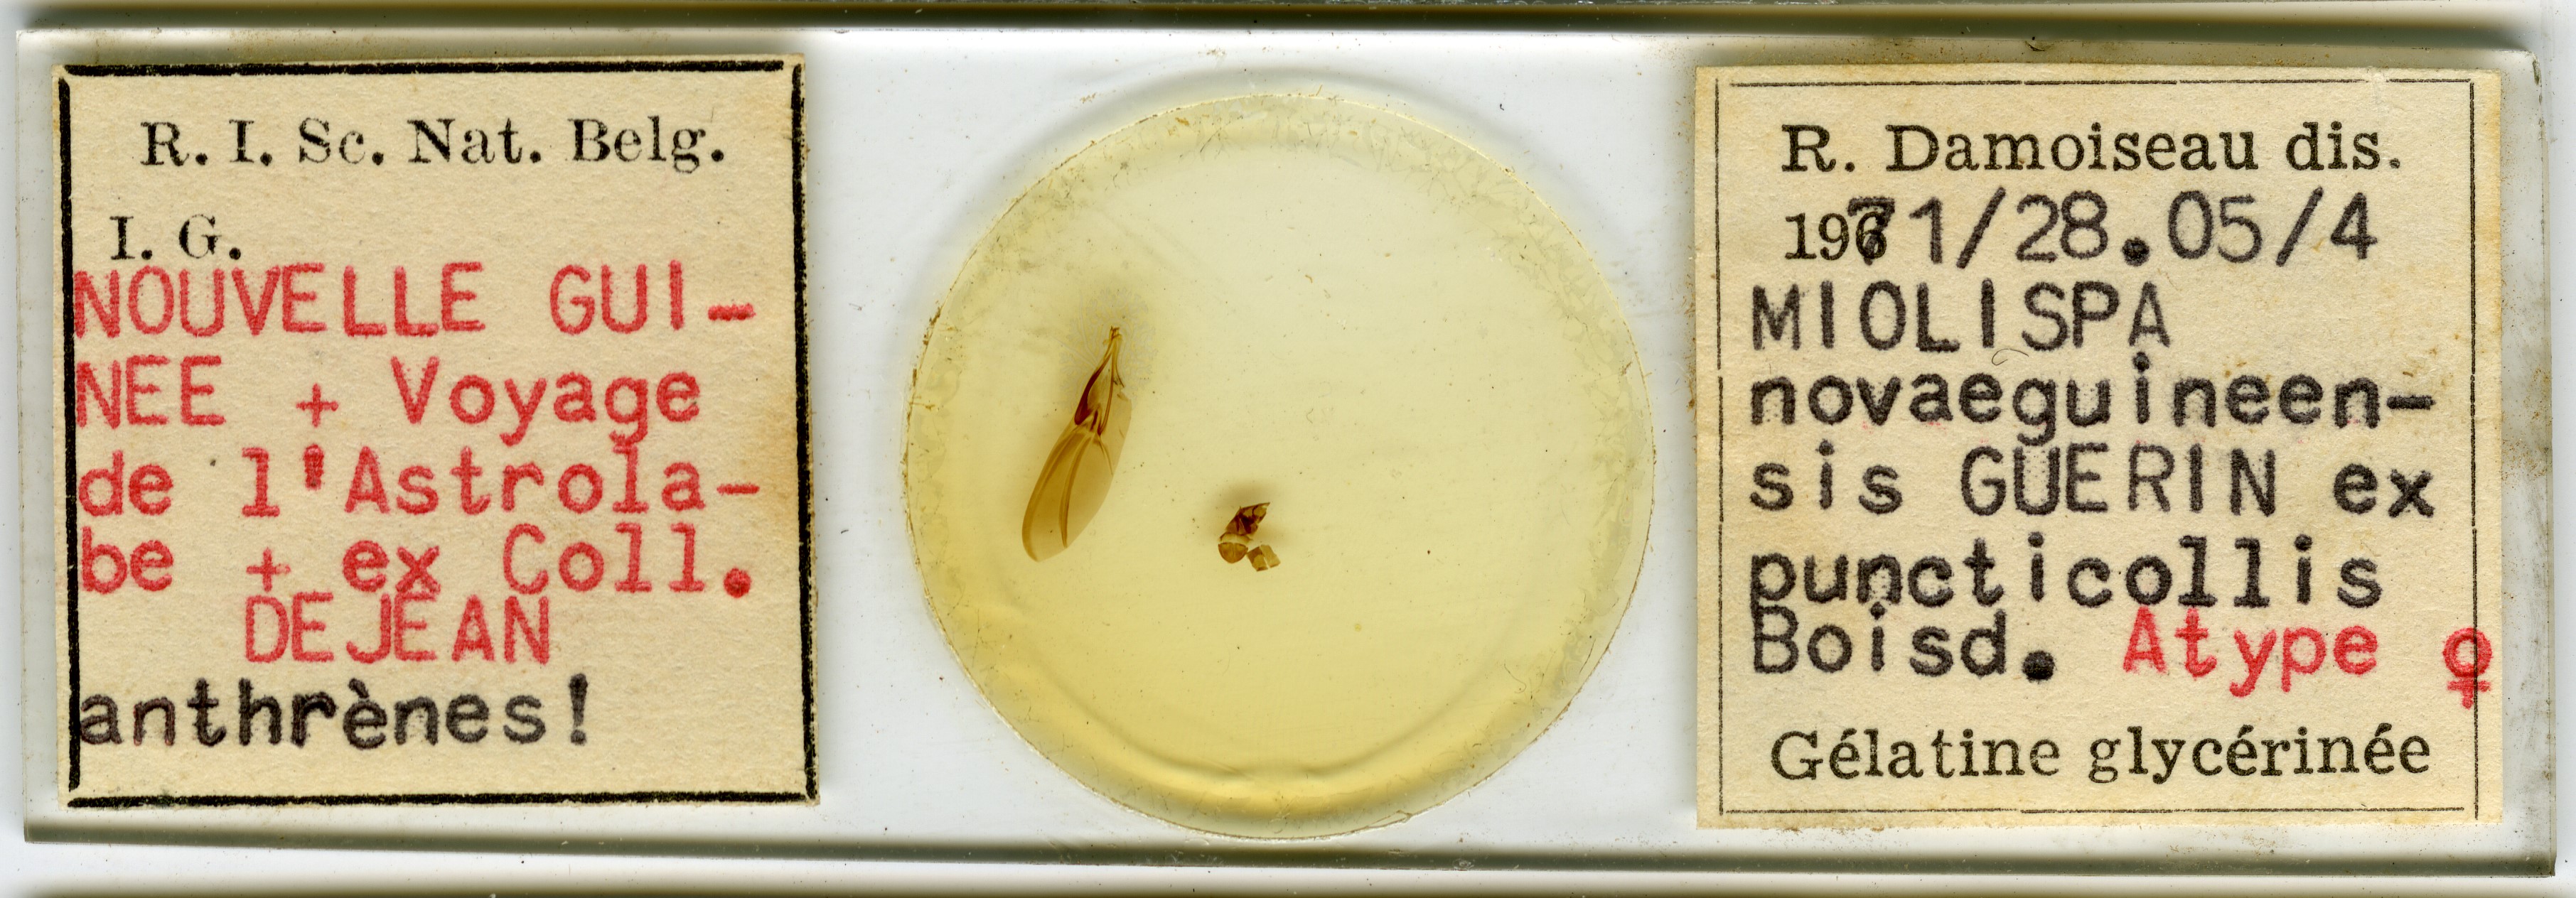 Miolispa novaeguineensis at Microscopic preparation.jpg